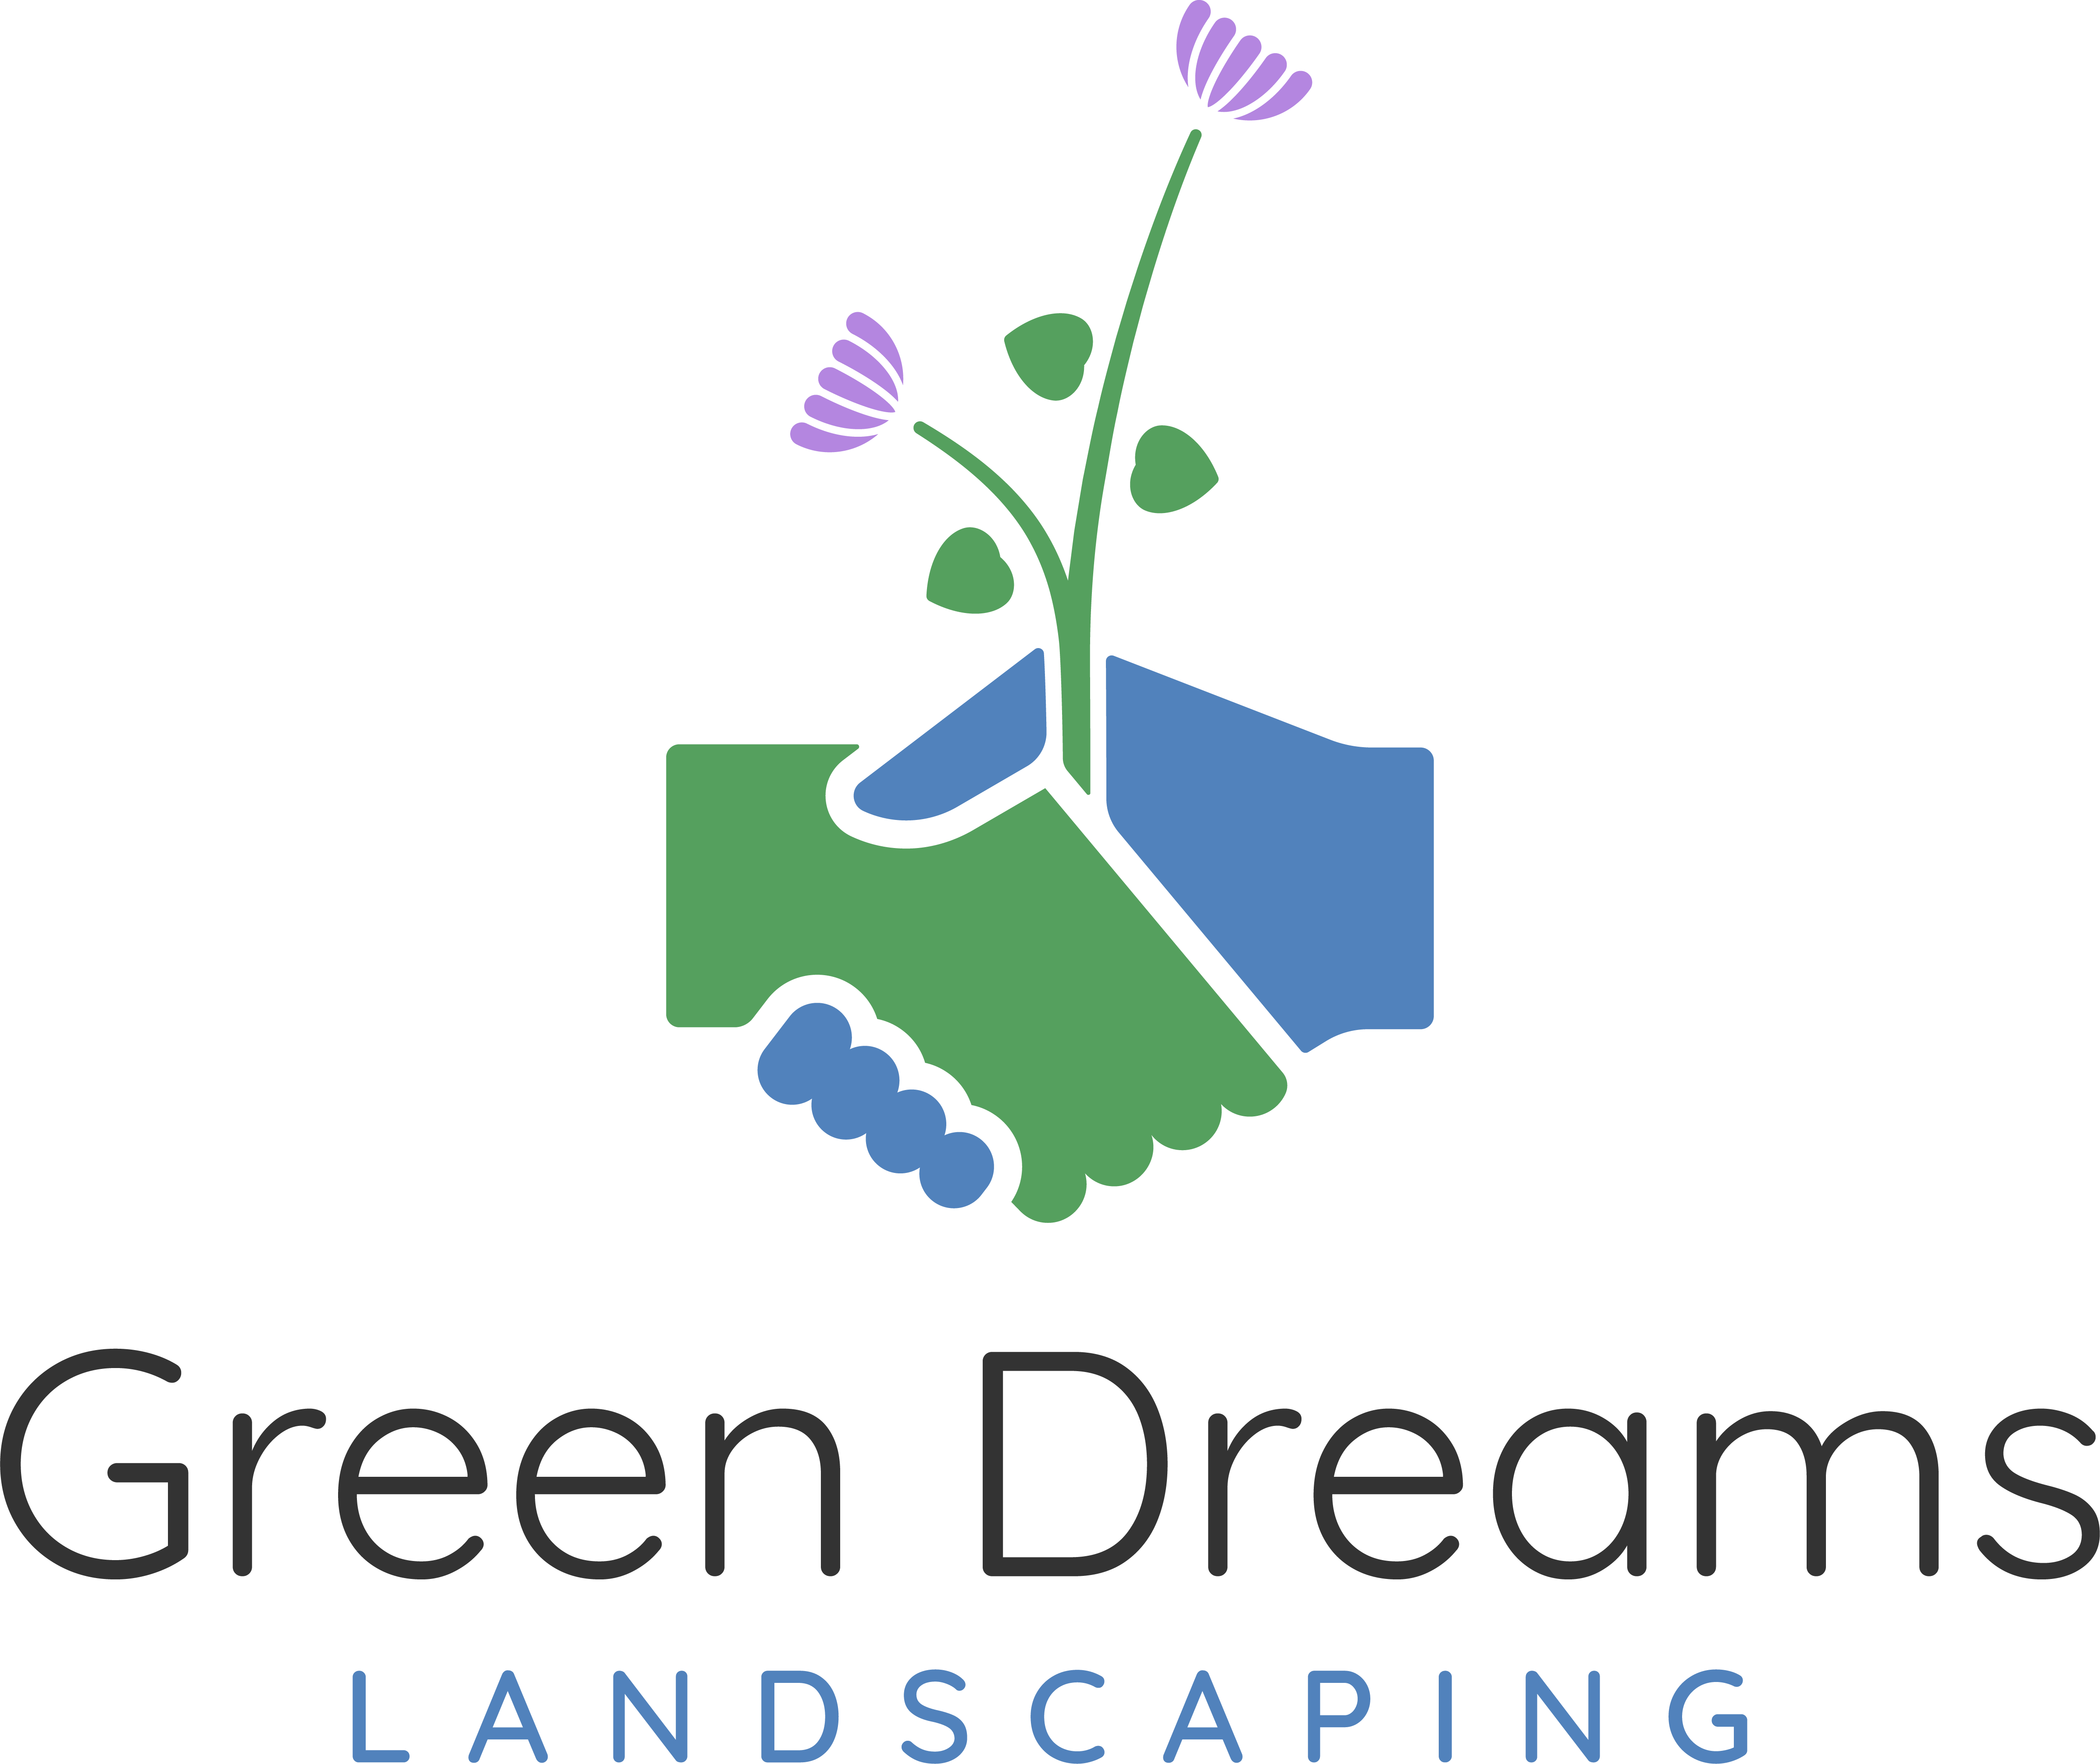 Green Dreams Landscaping